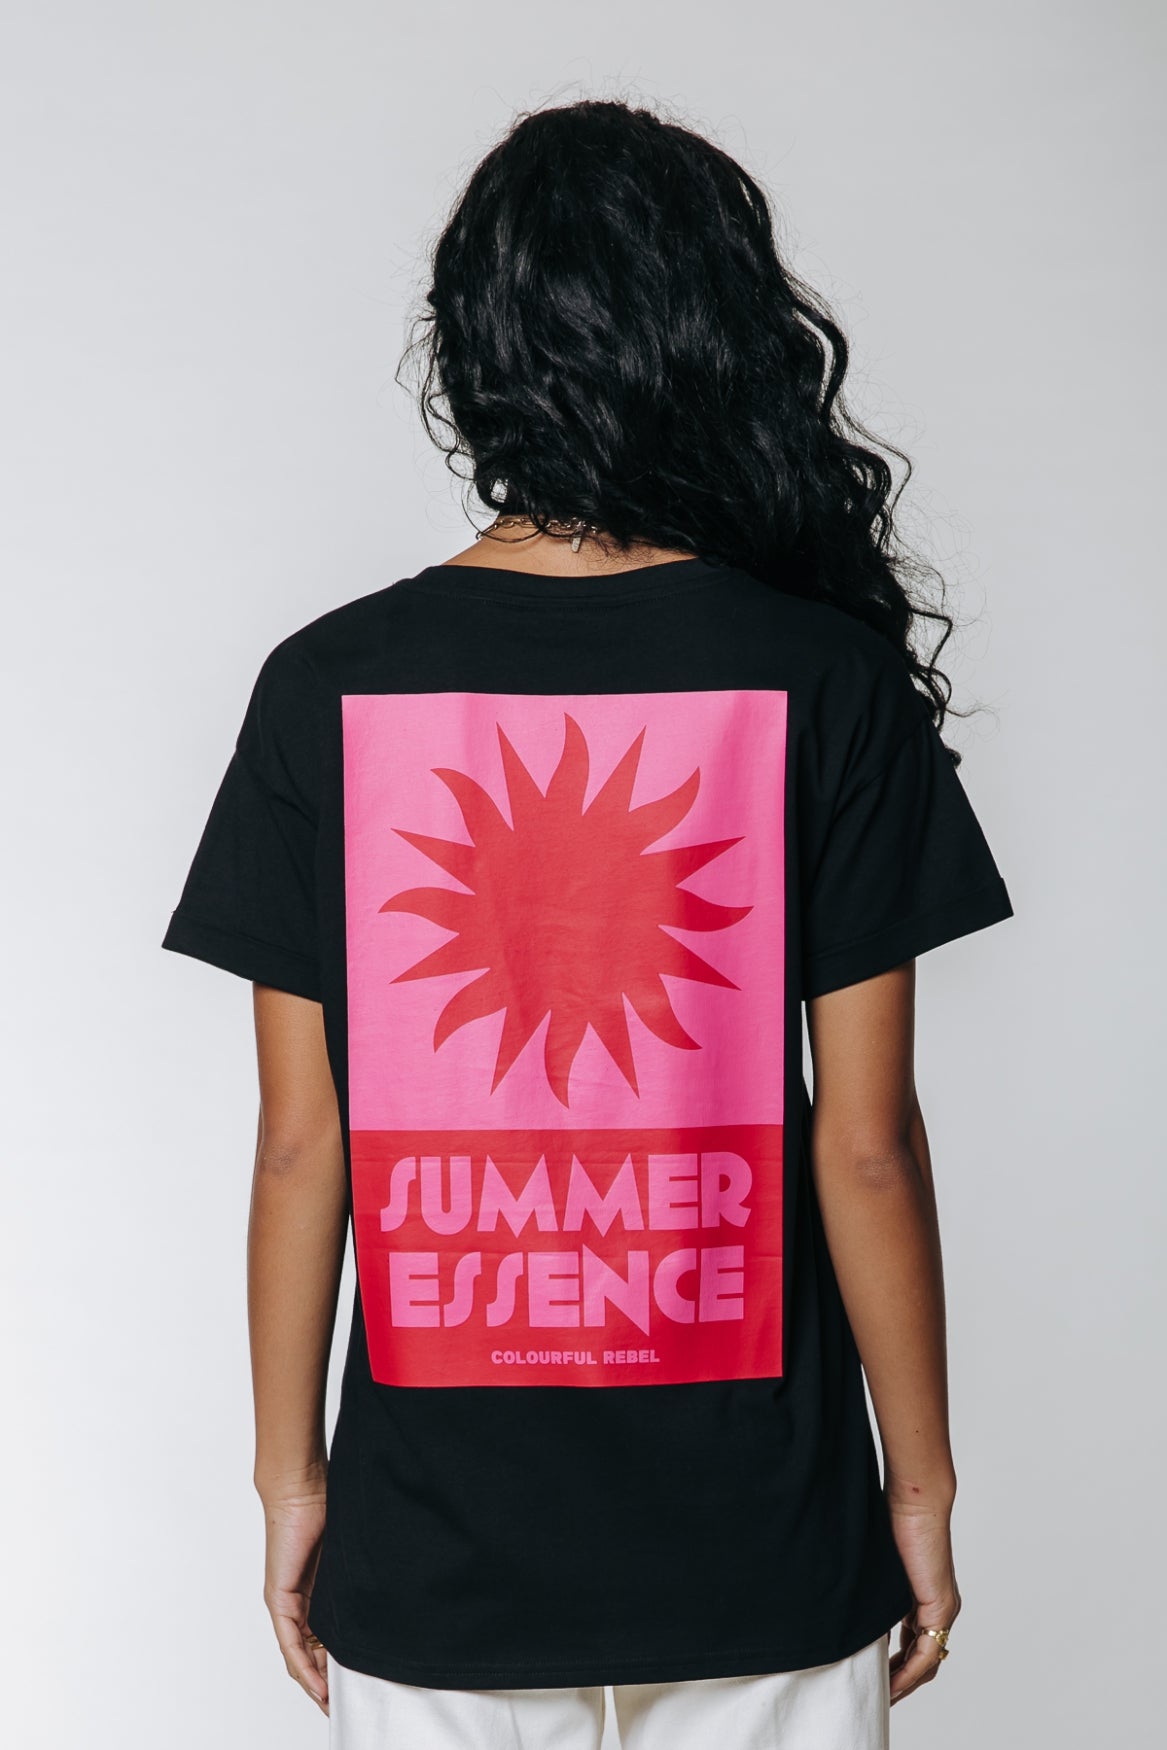 CR Summer Essence boxy tee - black